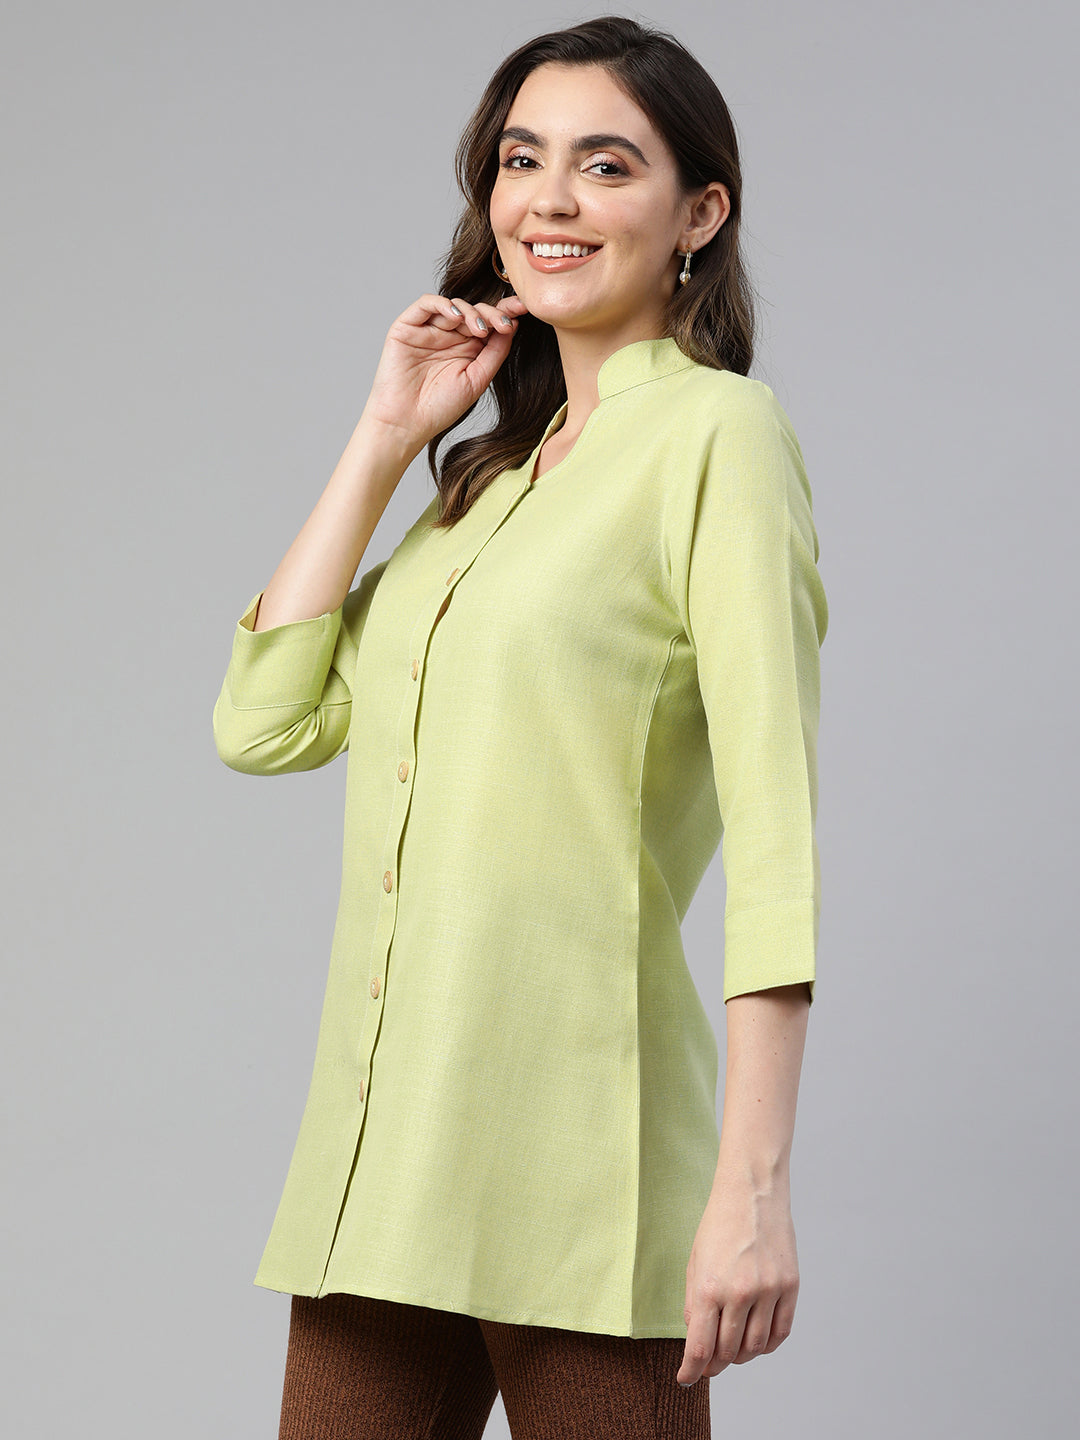 Cottinfab Mandarin Collar Cotton Shirt Style Longline Top